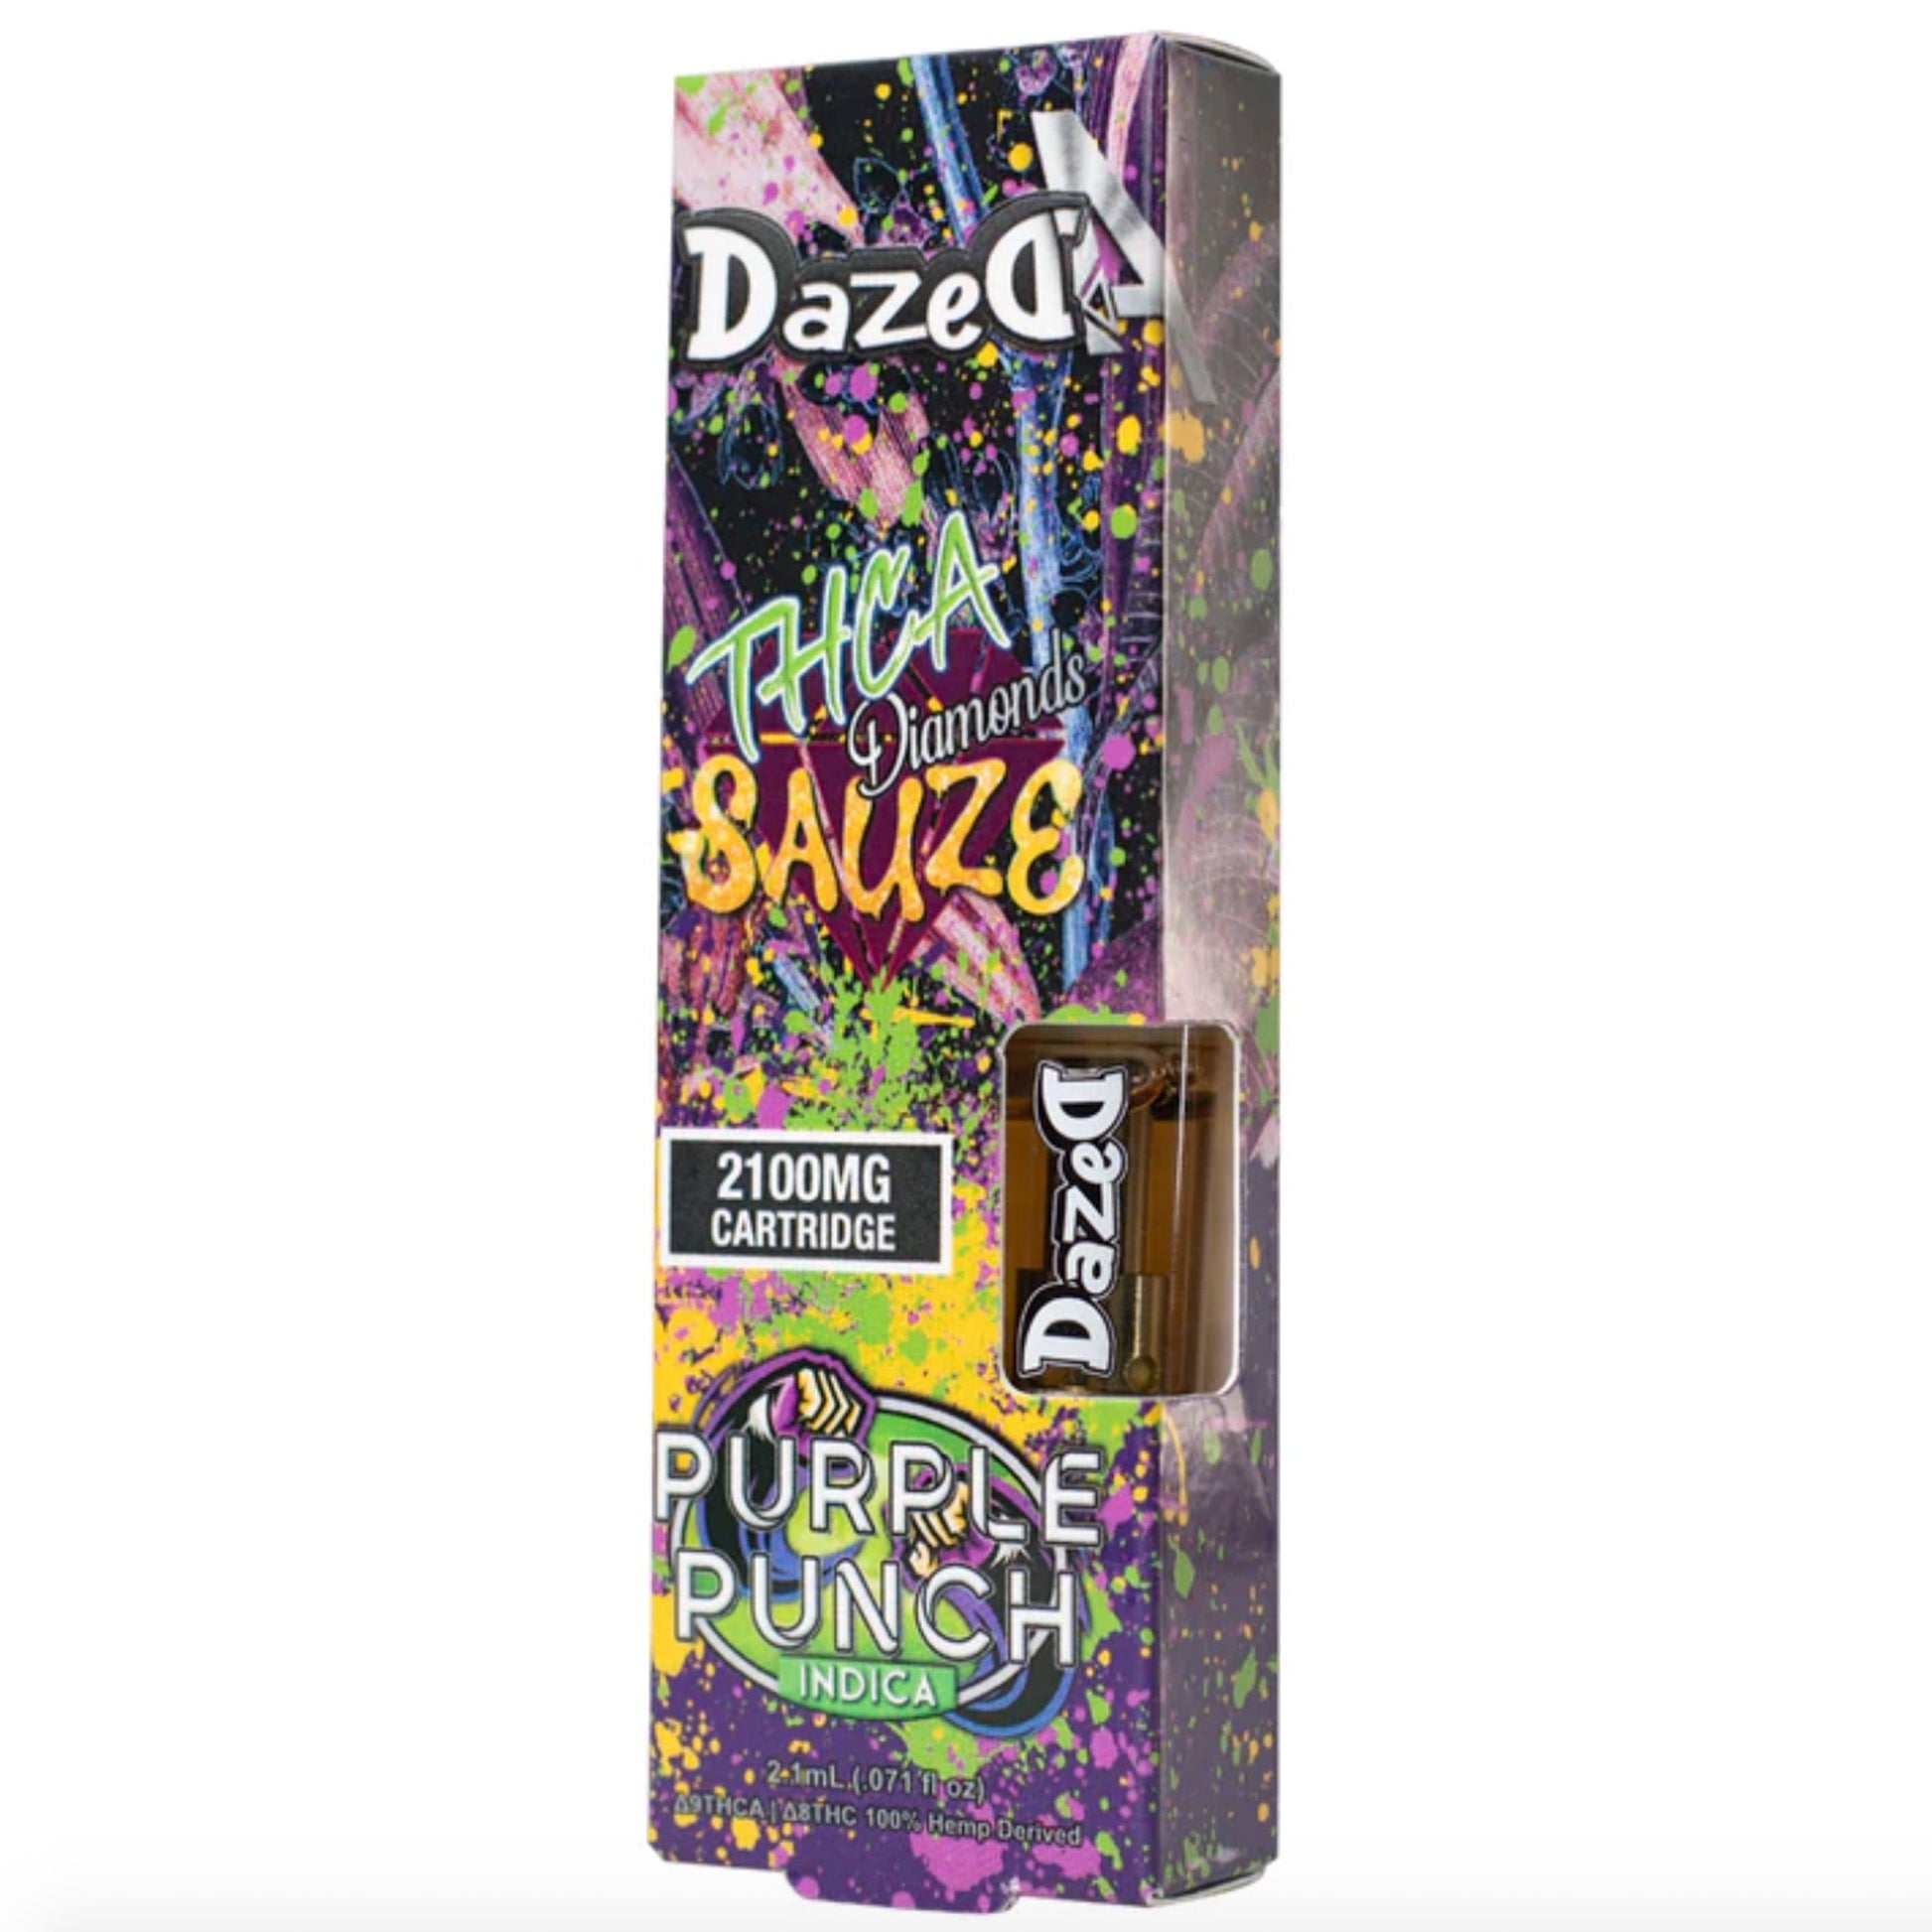 Dazed THC-A Diamond Sauze Cartridge - 2100mg